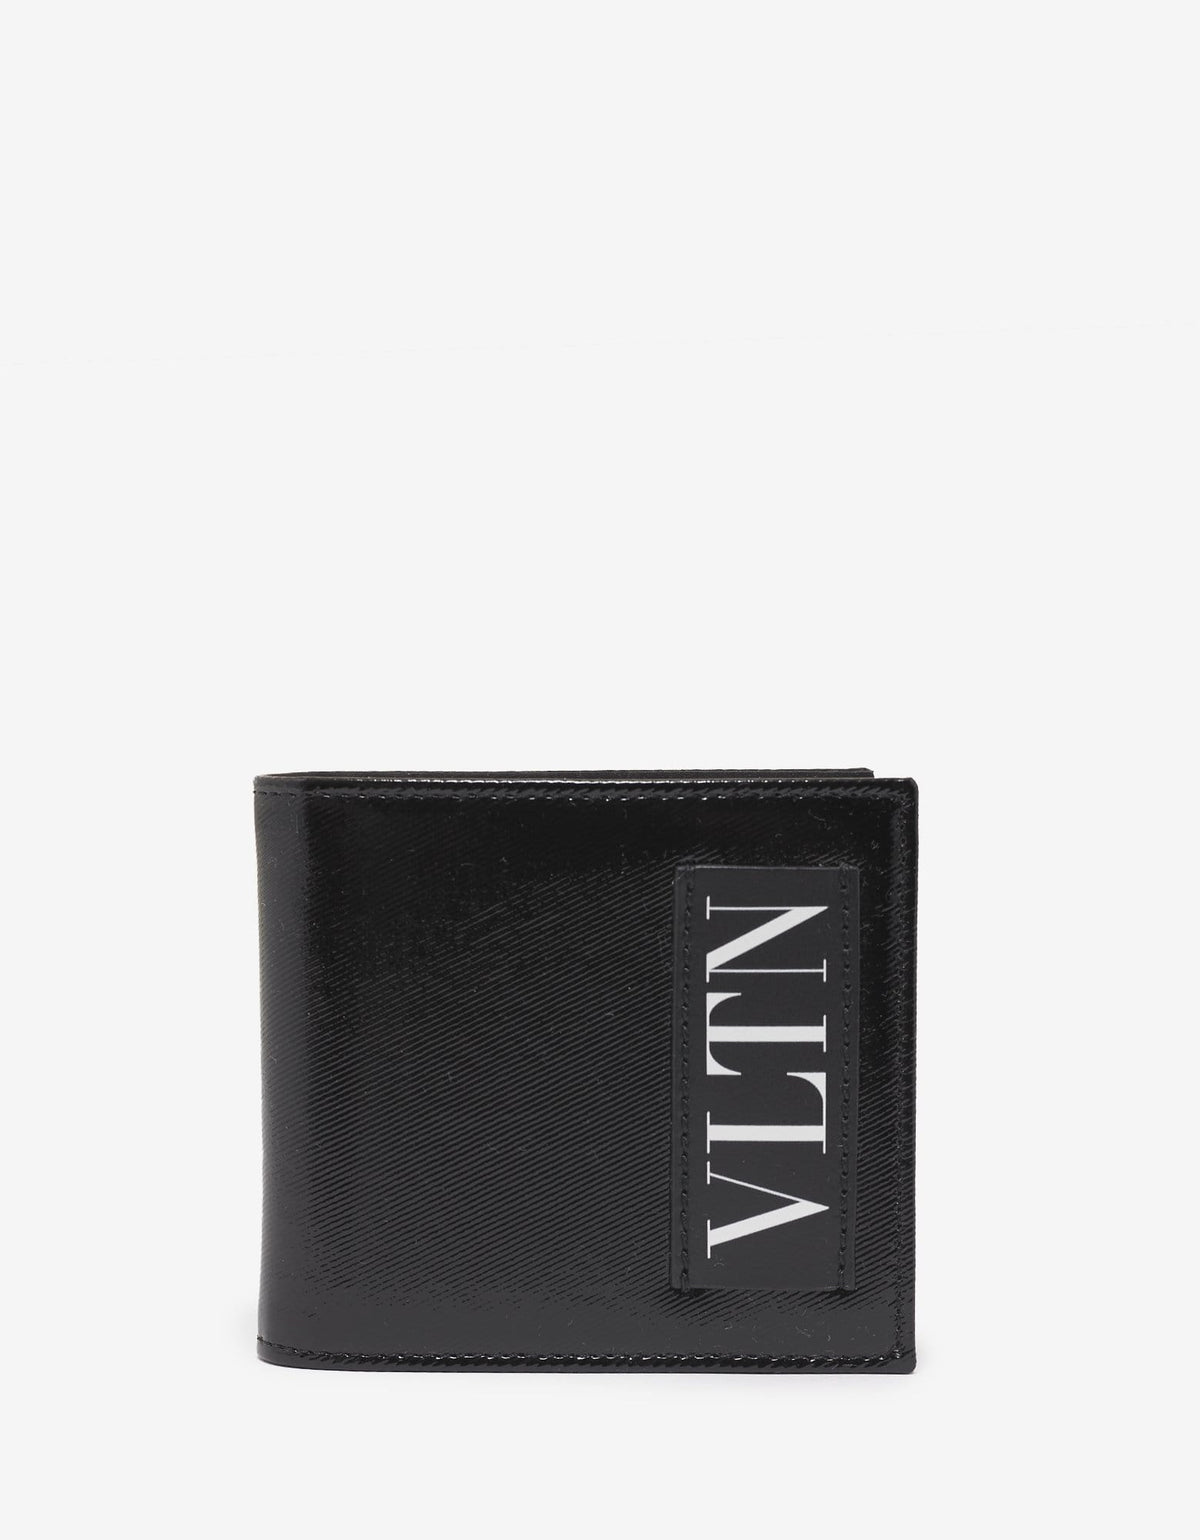 Valentino Garavani Black Patent Leather VLTN Billfold Wallet